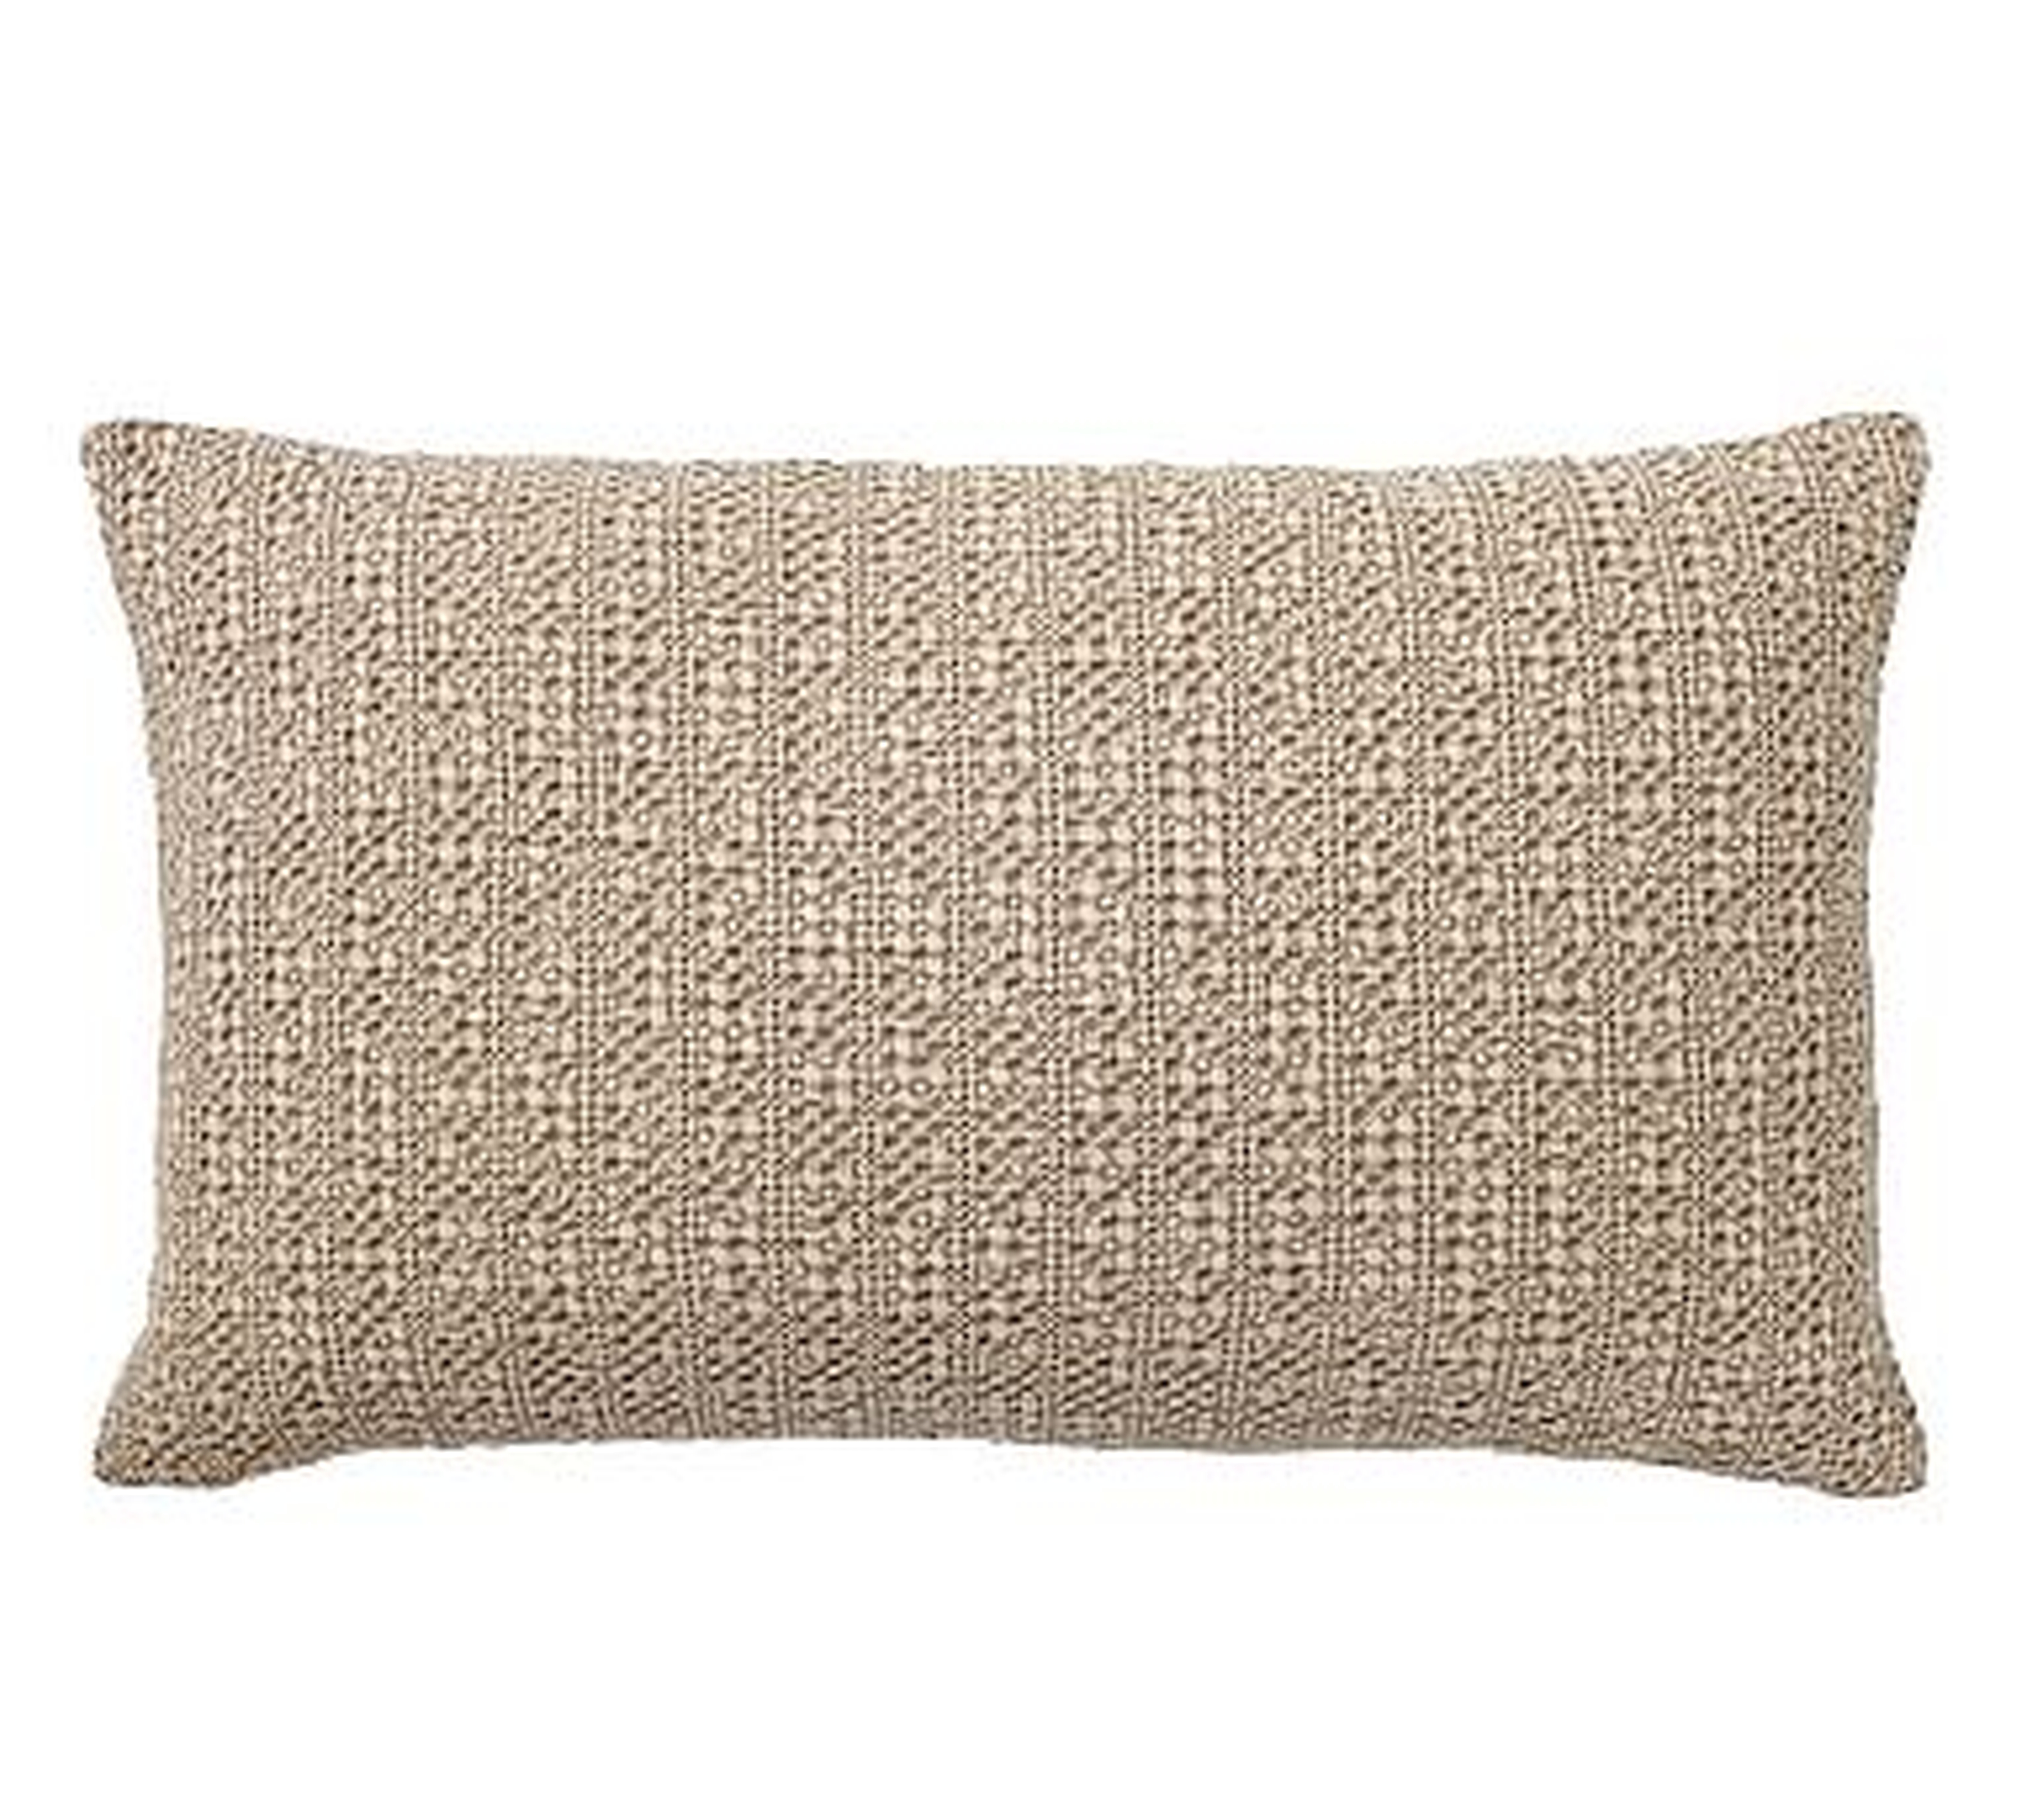 Honeycomb Lumbar Pillow Cover, 16 x 26", Driftwood - Pottery Barn